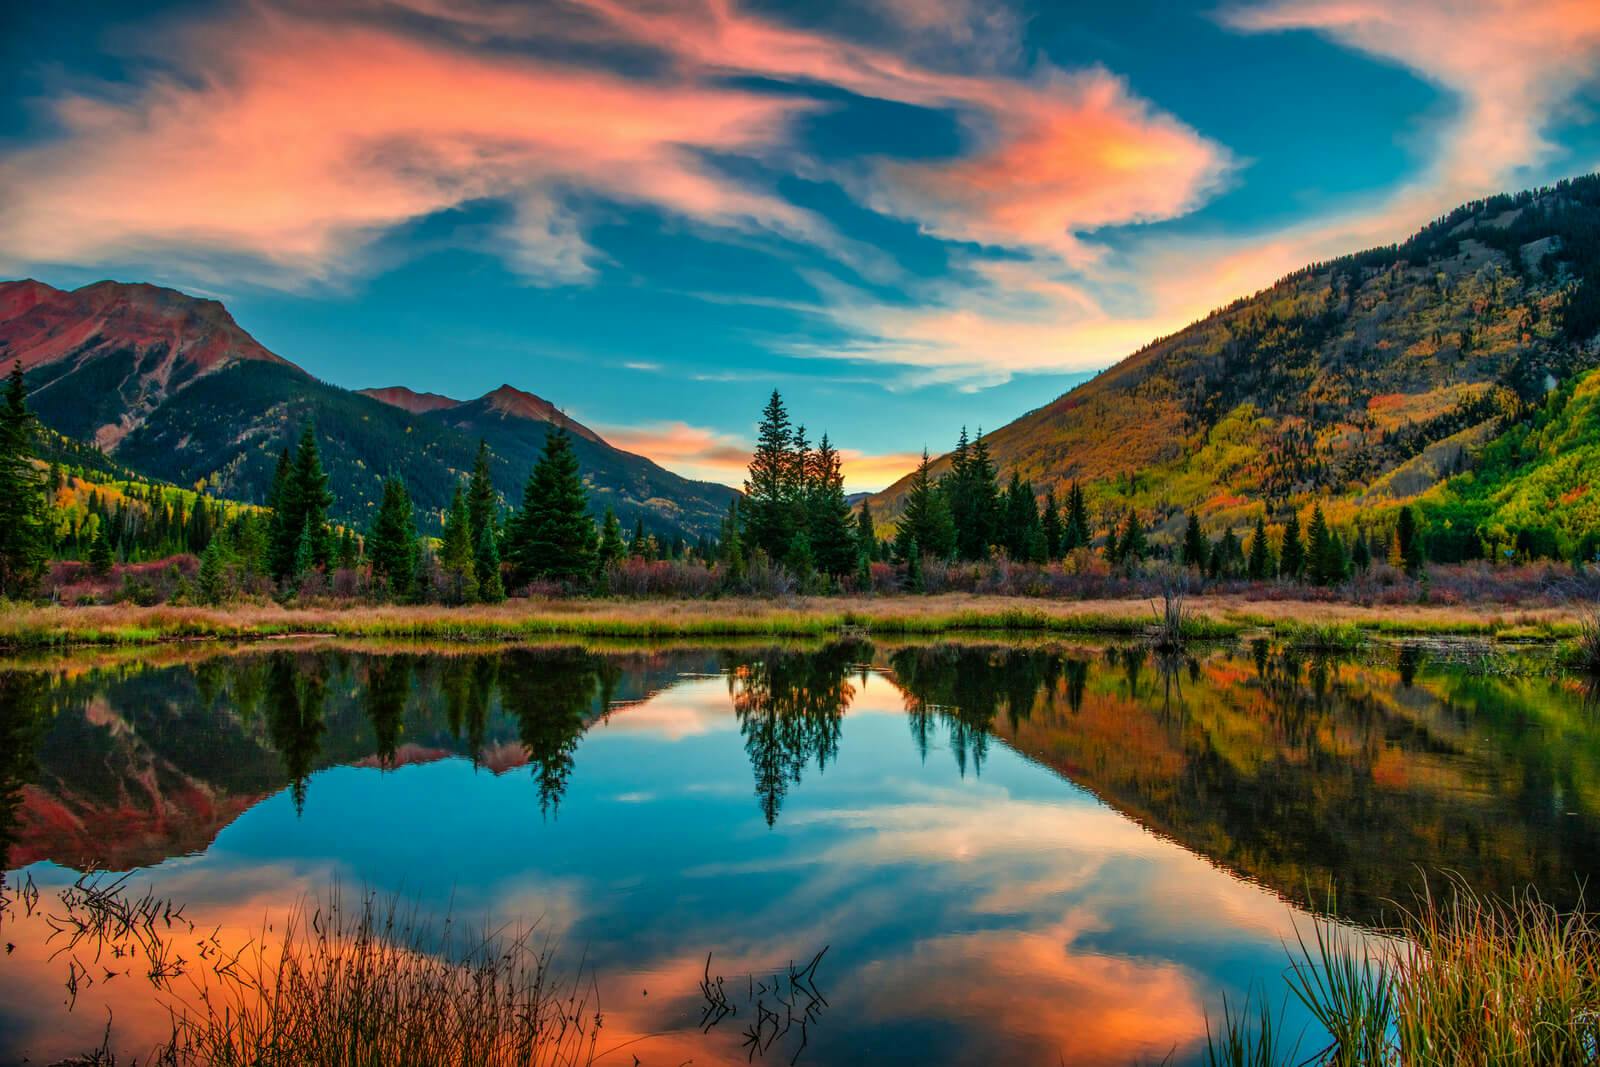 Rocky Mountains sunrise over a still lake